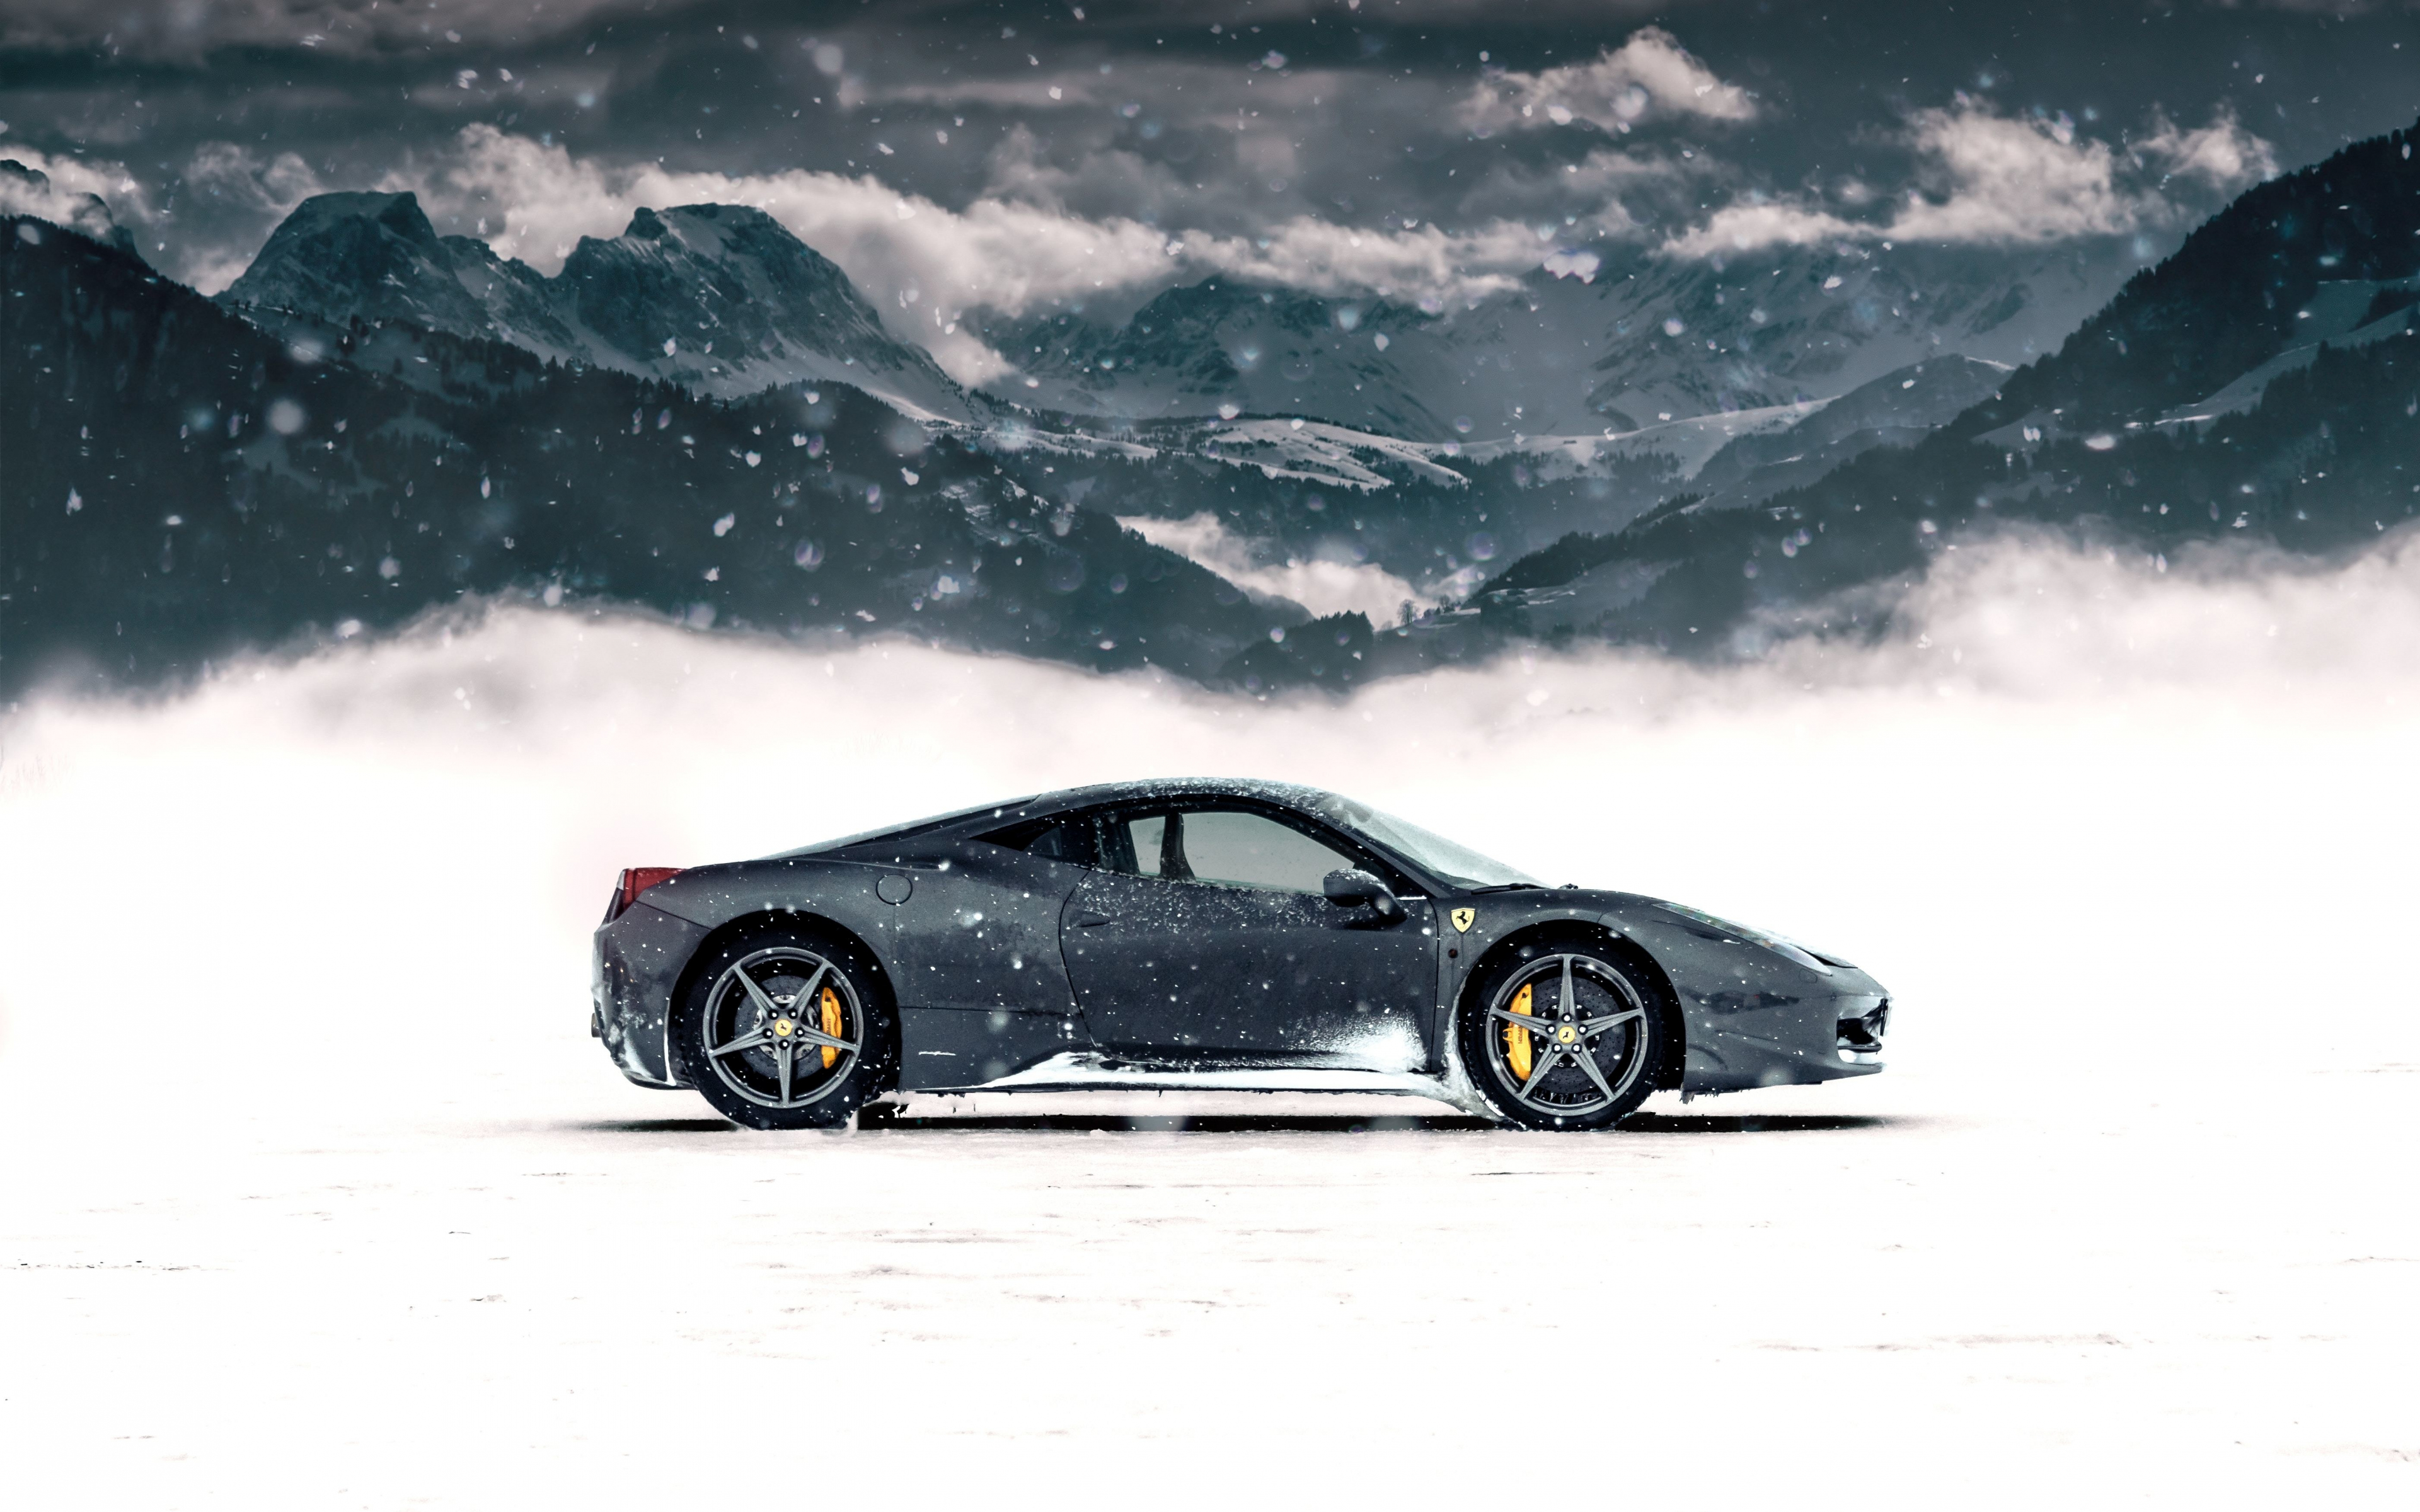 Download 3840x2400 Wallpaper Ferrari Car Off Road 4k Ultra Hd 16 10 Widescreen 3840x2400 Hd Image Background 20820